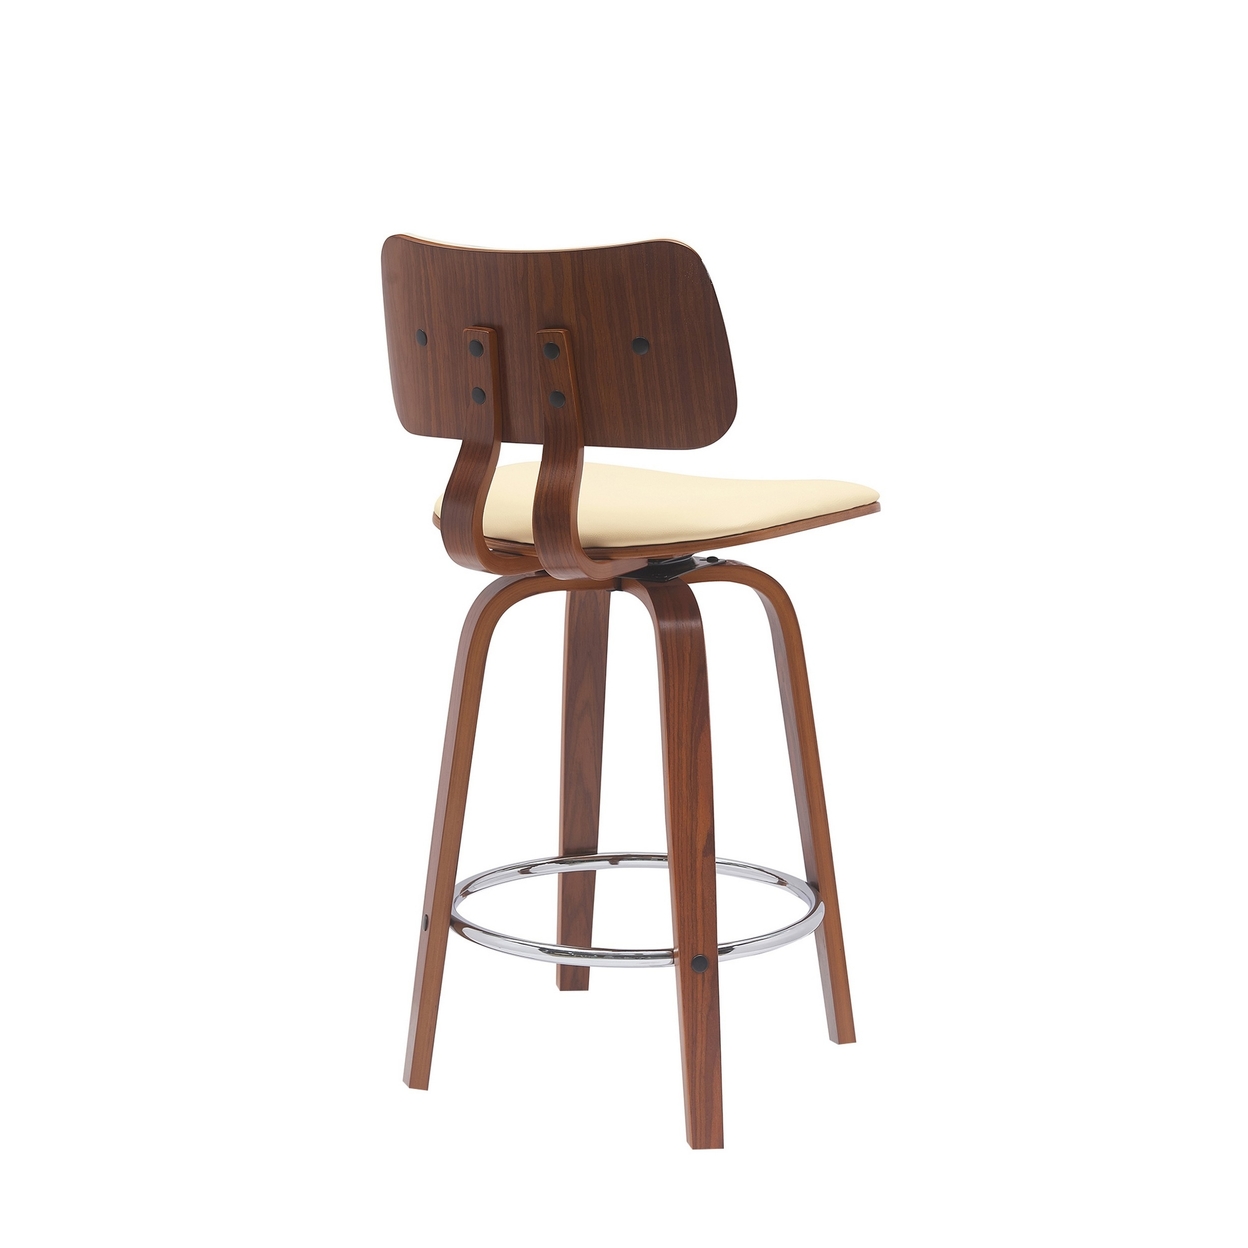 Pino 26 Inch Swivel Counter Stool Chair, Cream Faux Leather, Walnut Brown - Saltoro Sherpi